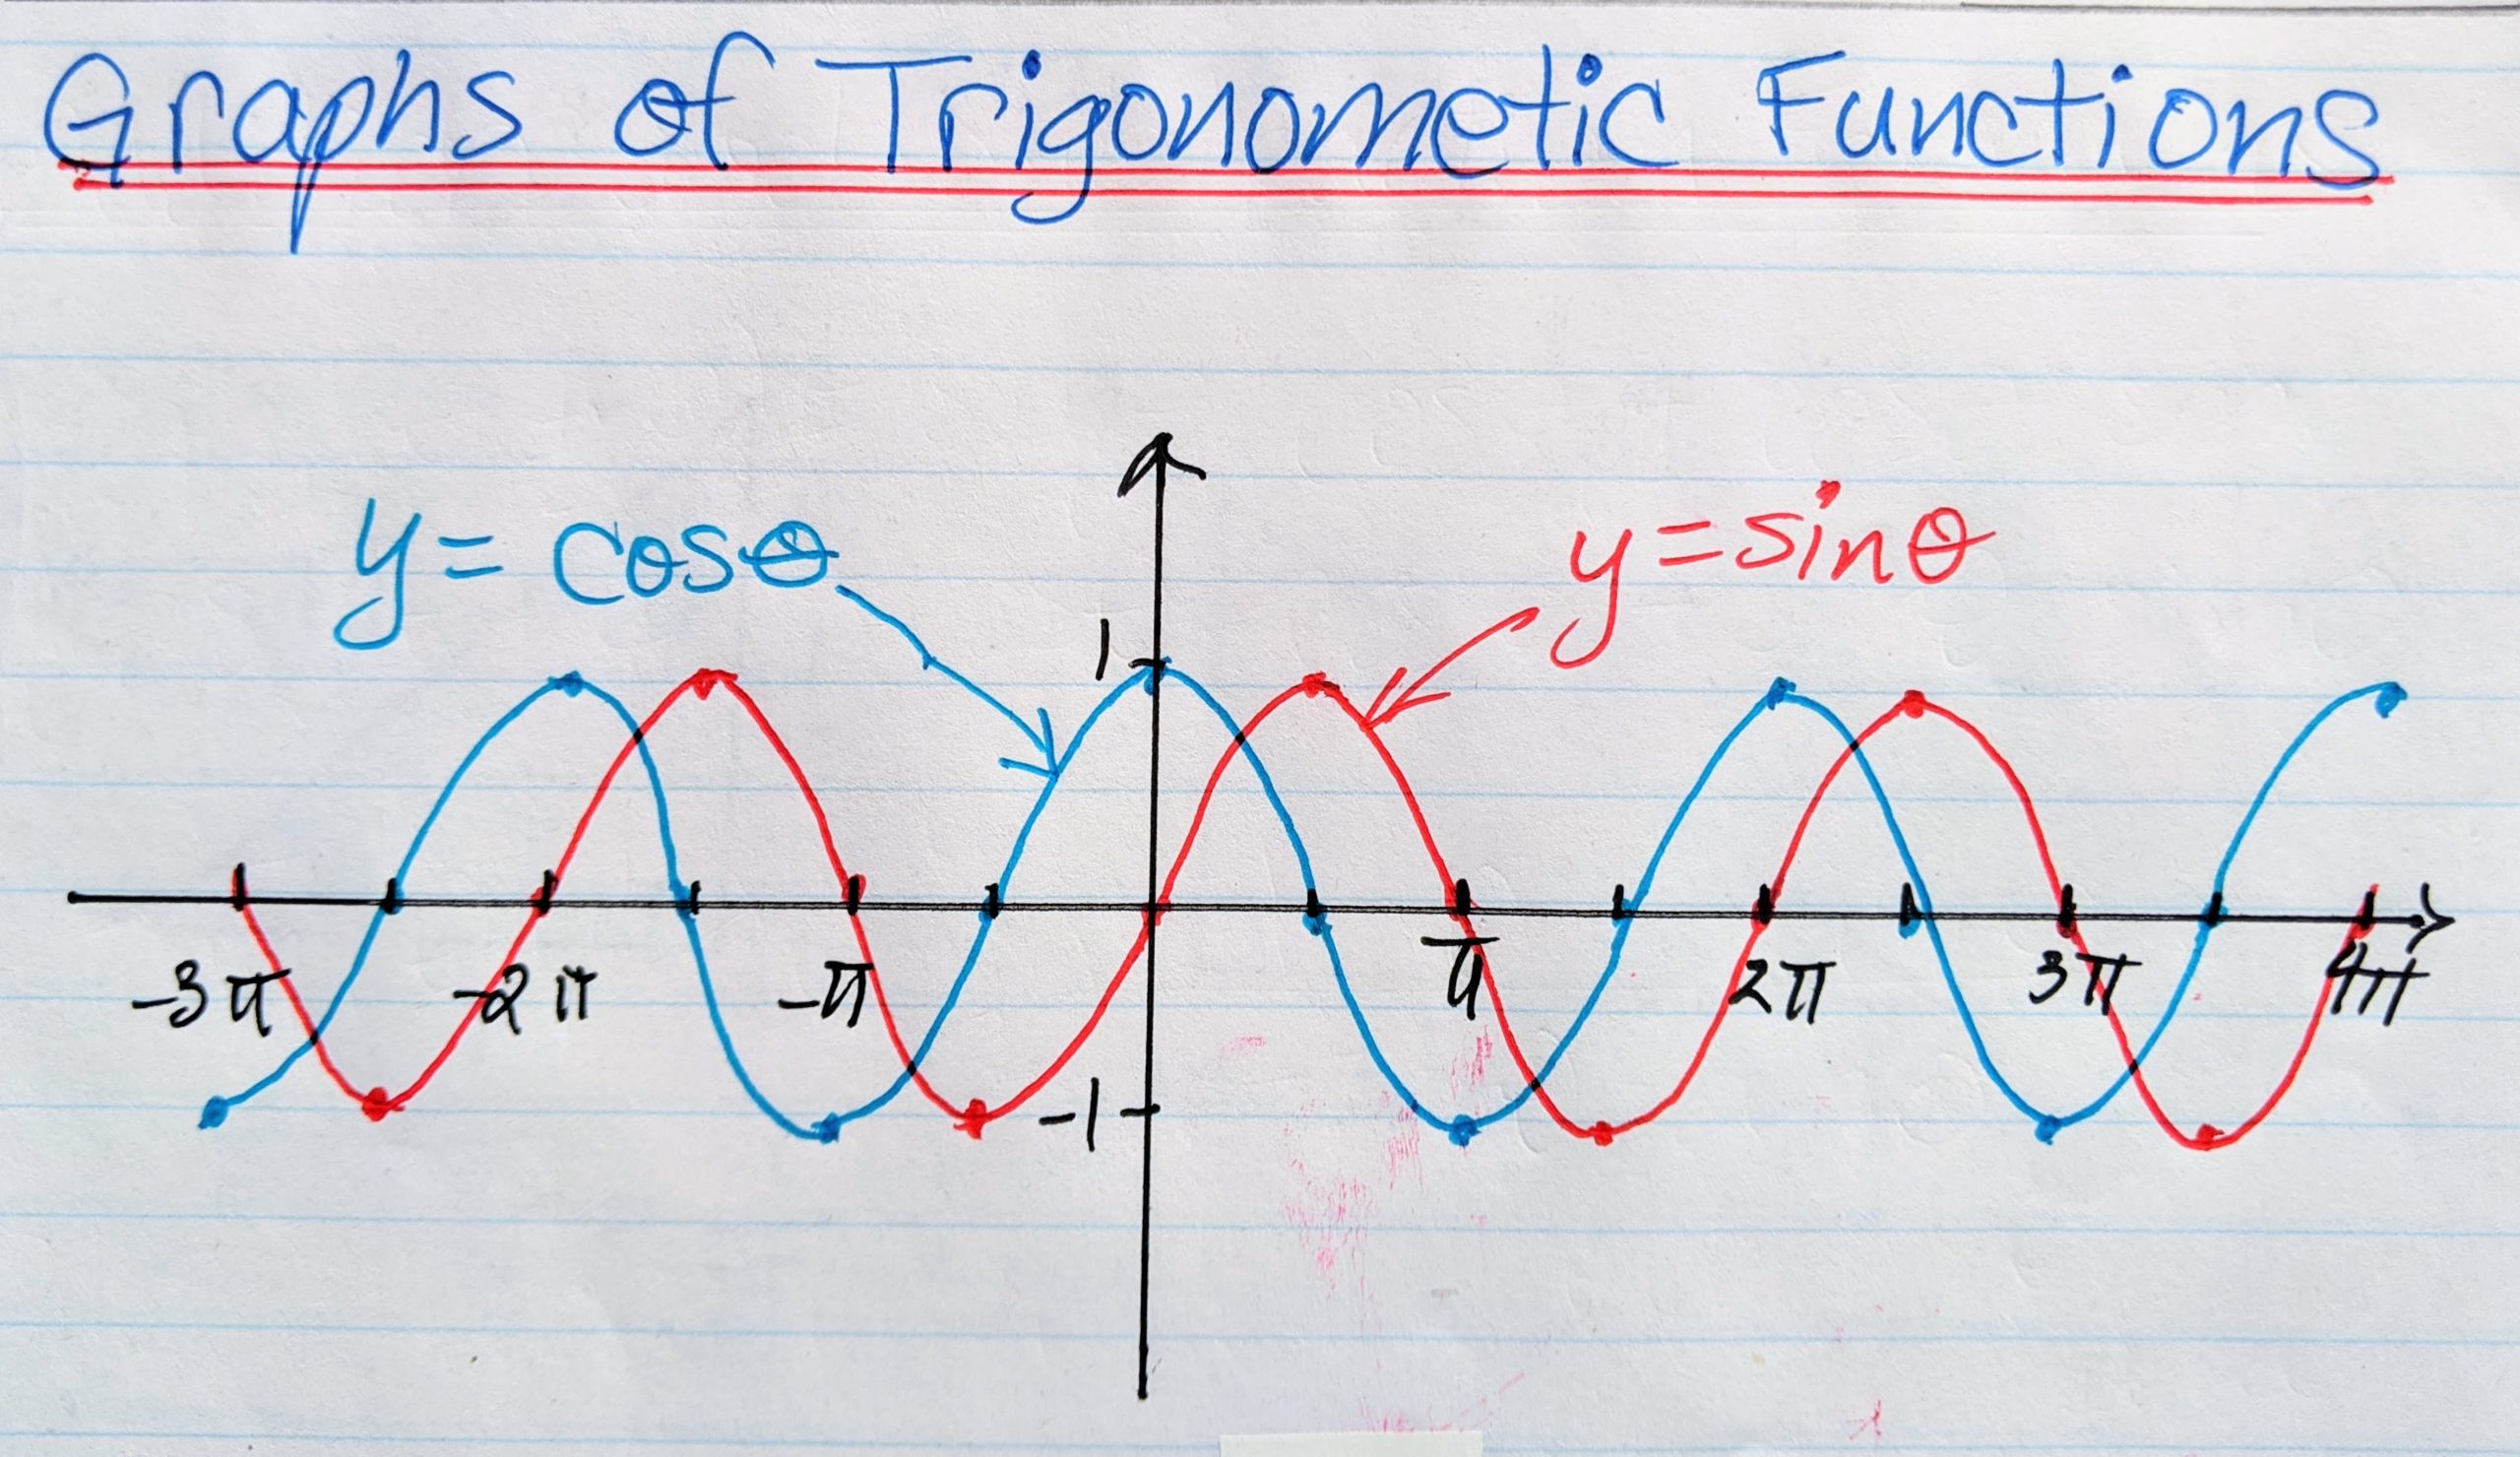 graphing-trigonometric-functions-math-worksheets-math-videos-ottawa-toronto-math-tutoring